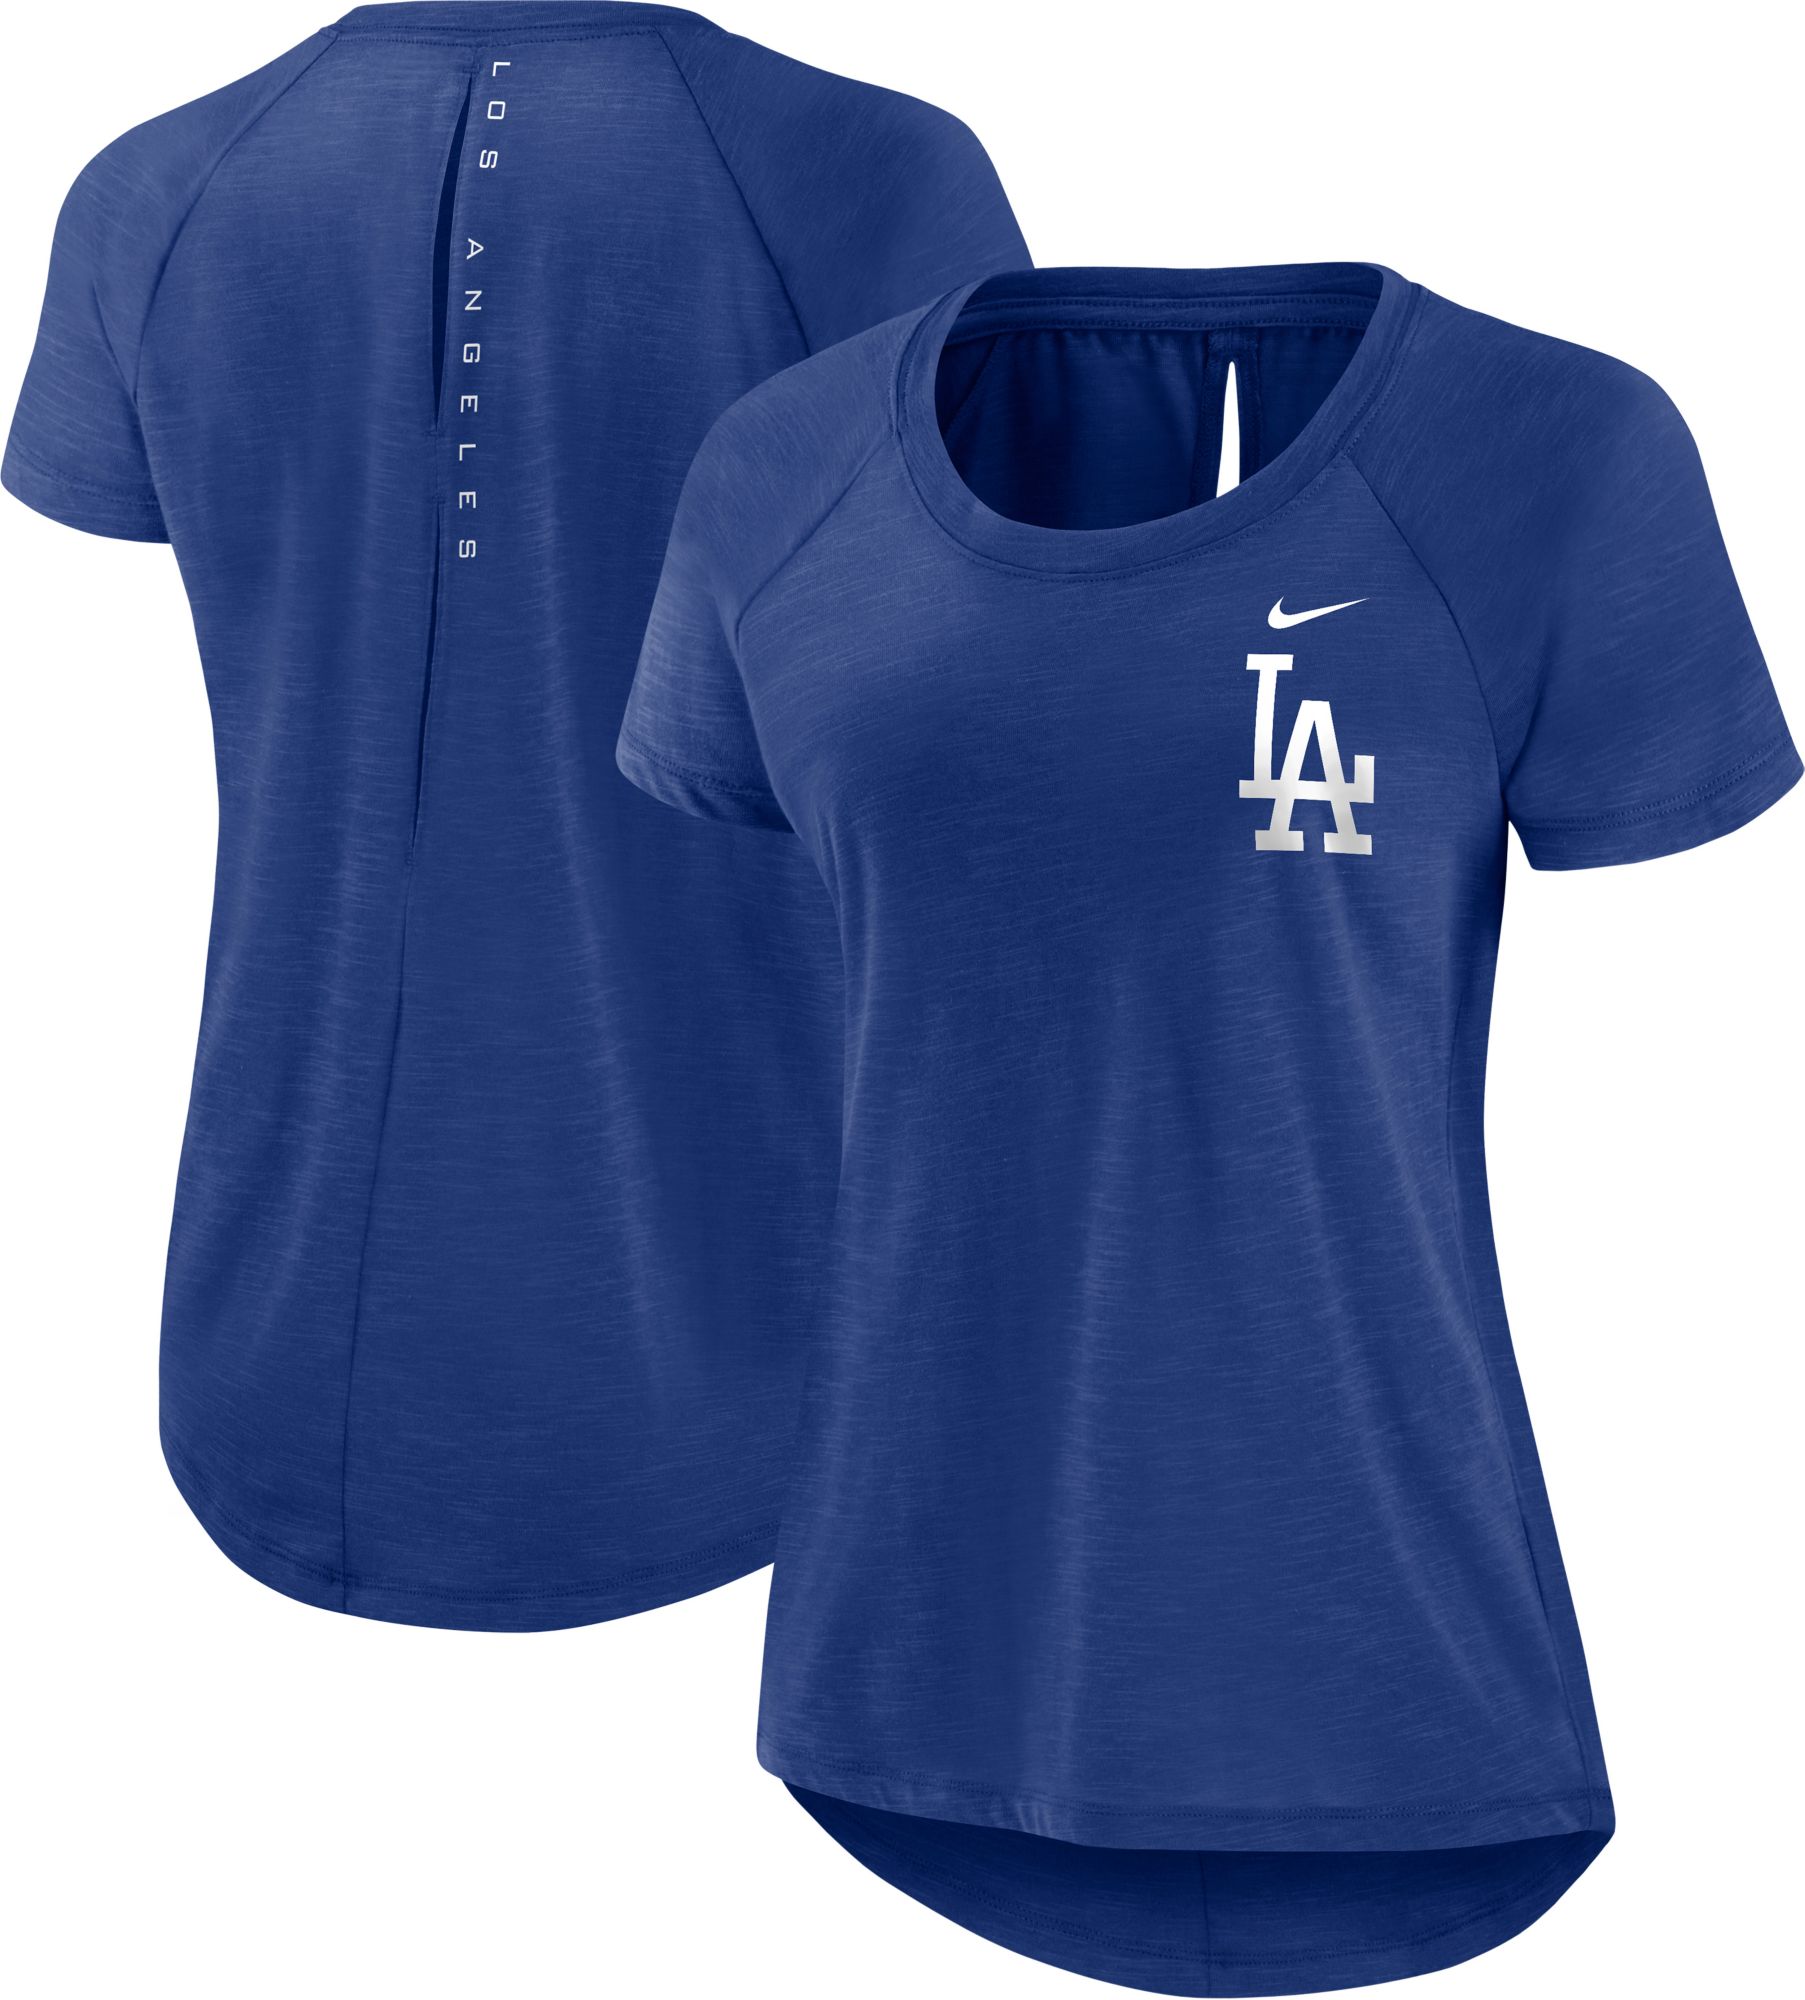 Nike / Women's Los Angeles Dodgers Blue Summer Breeze T-Shirt